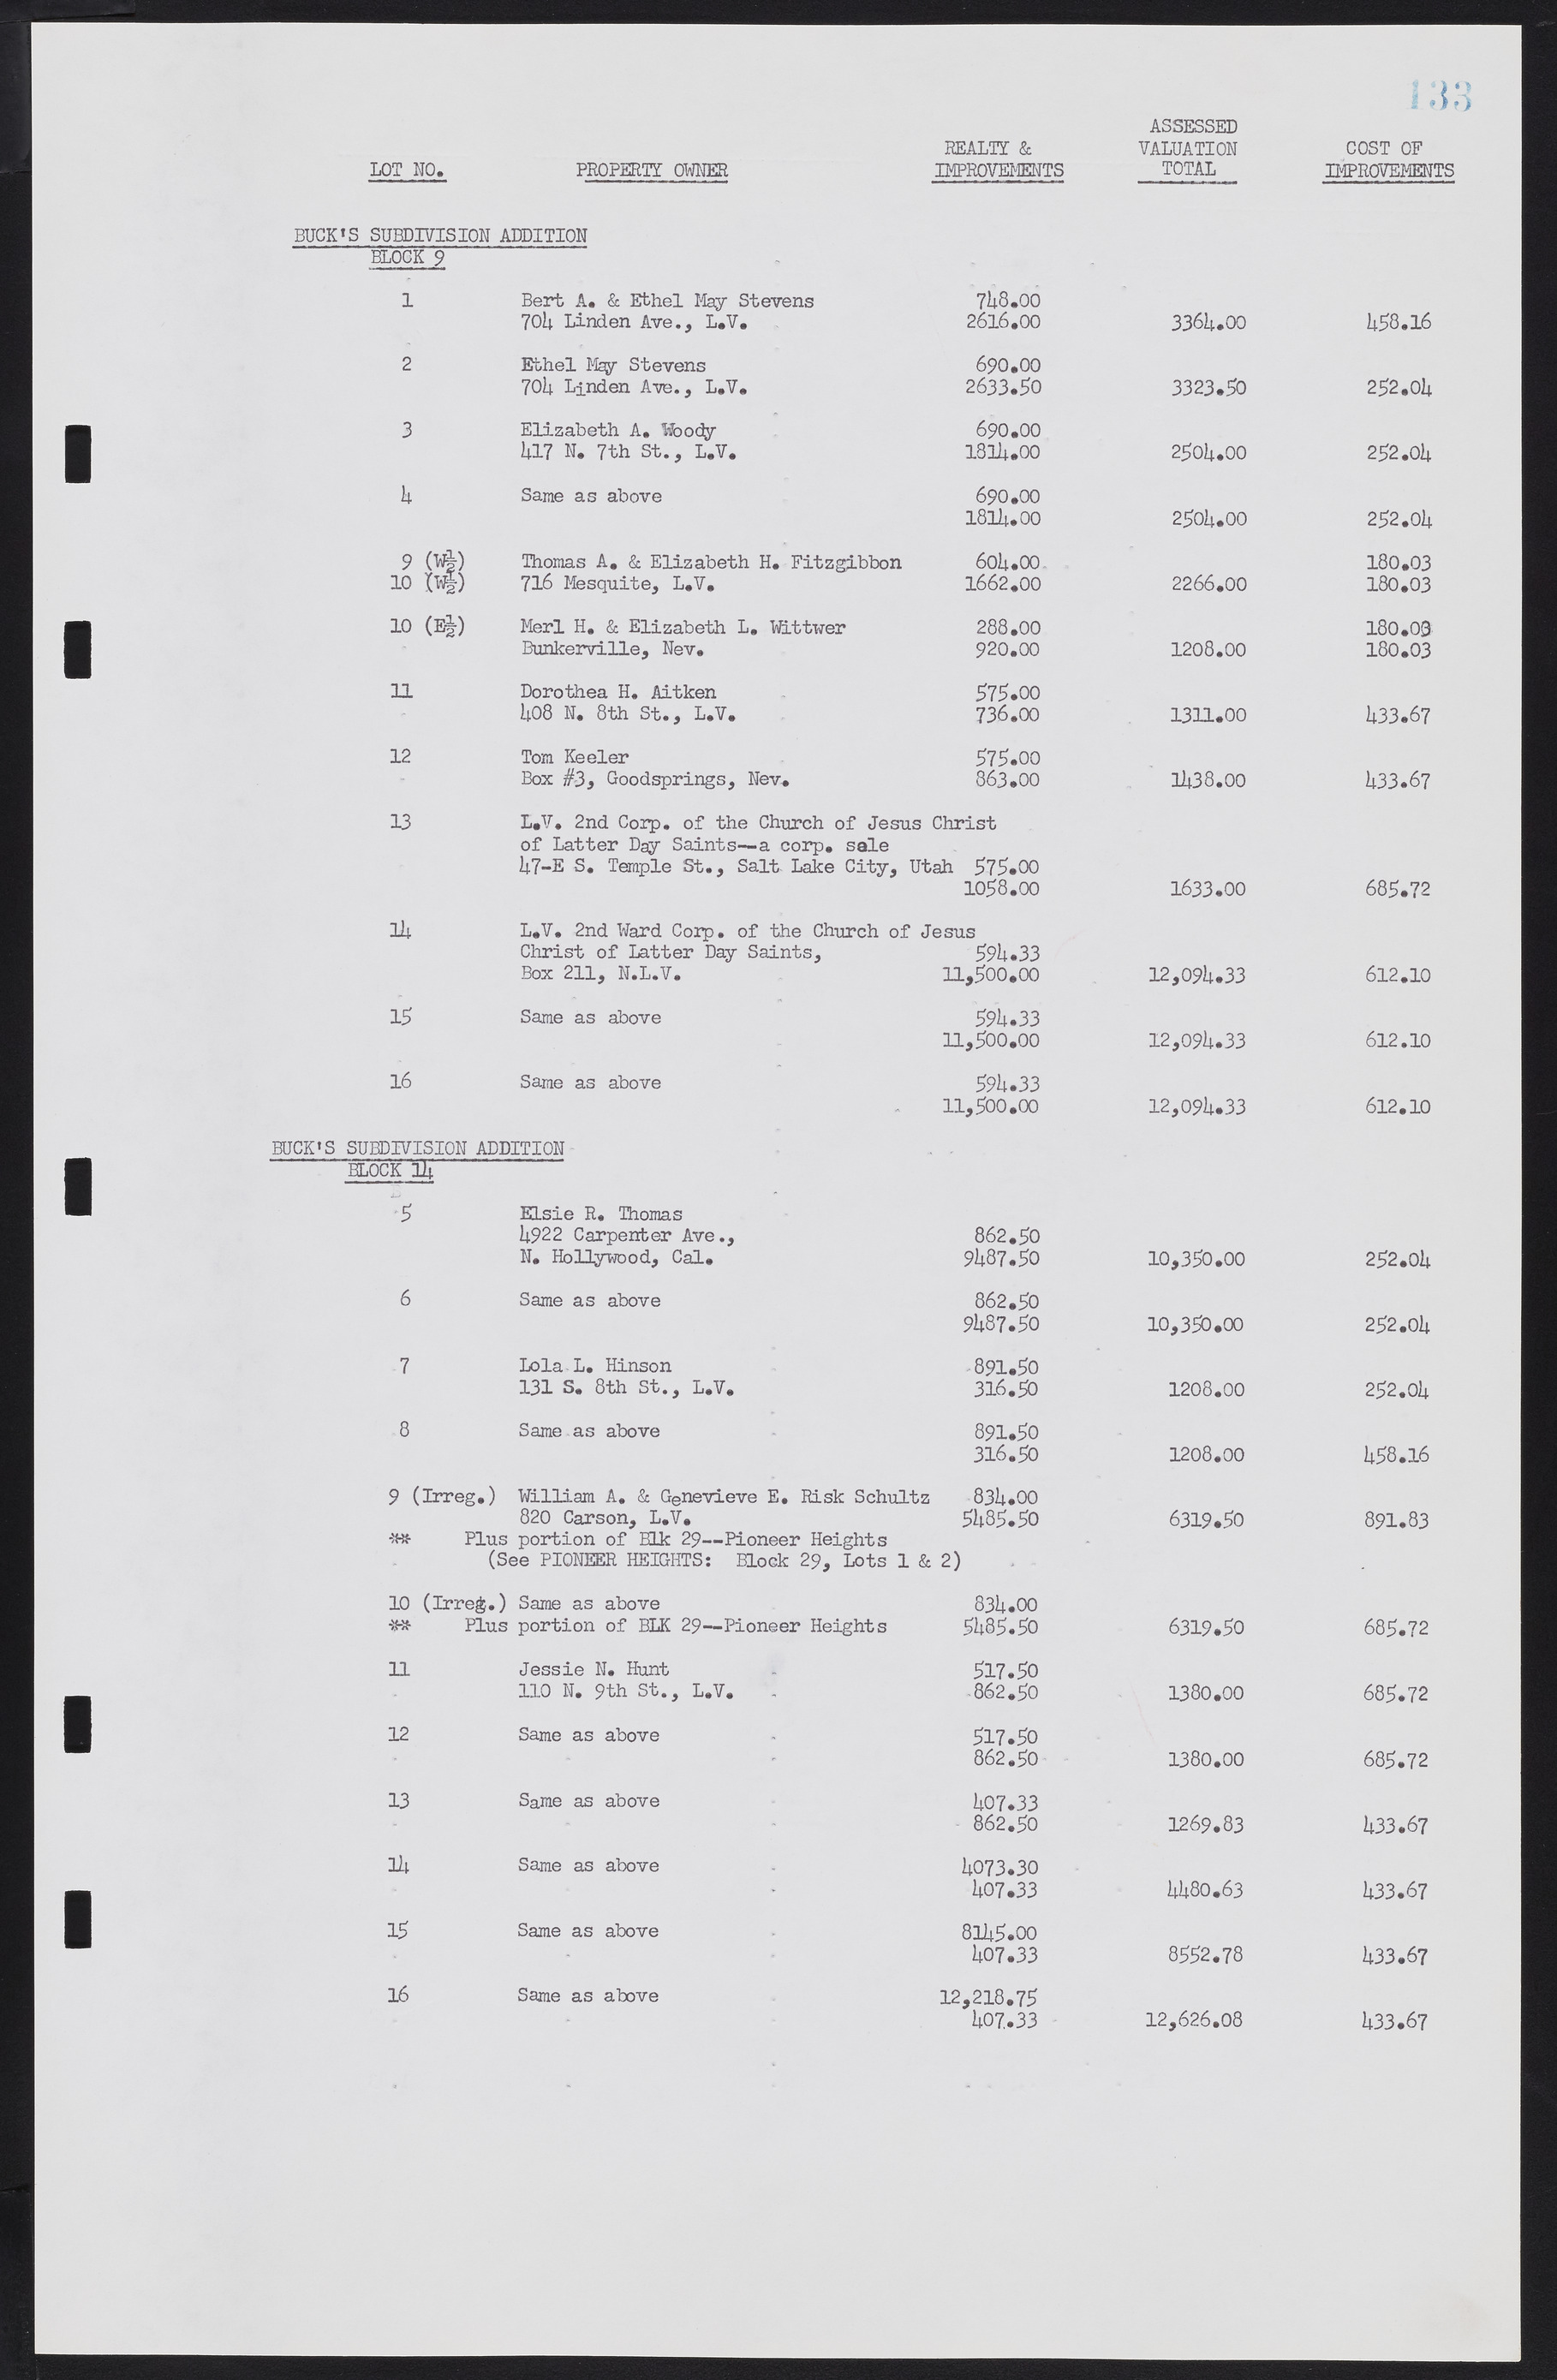 Las Vegas City Commission Minutes, February 17, 1954 to September 21, 1955, lvc000009-137